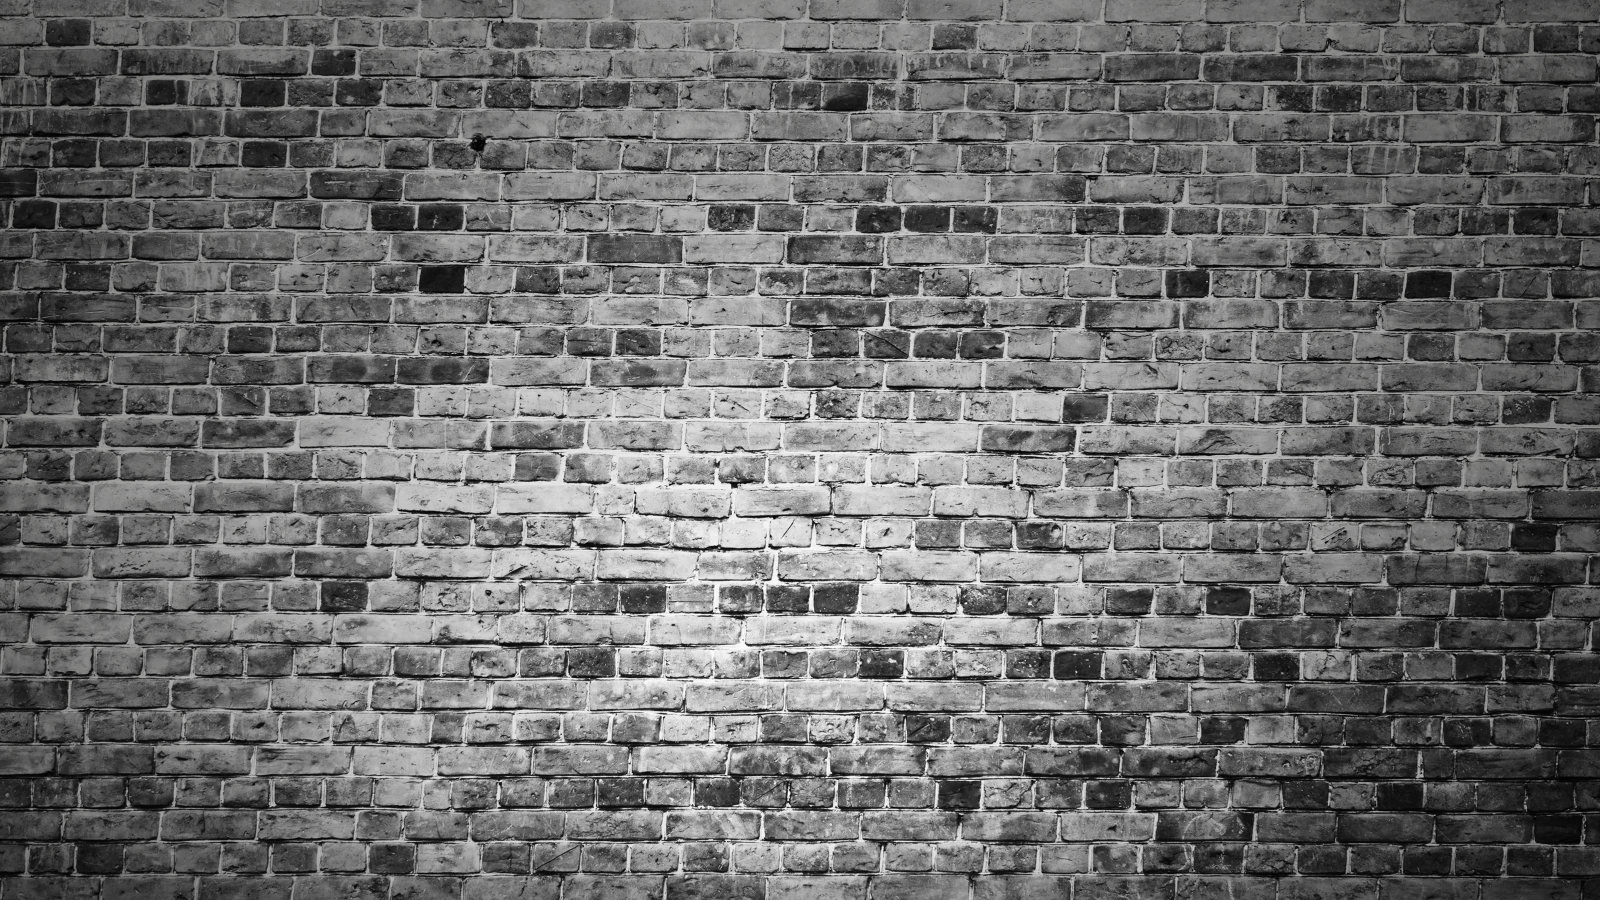 Brick Wall Black And White 